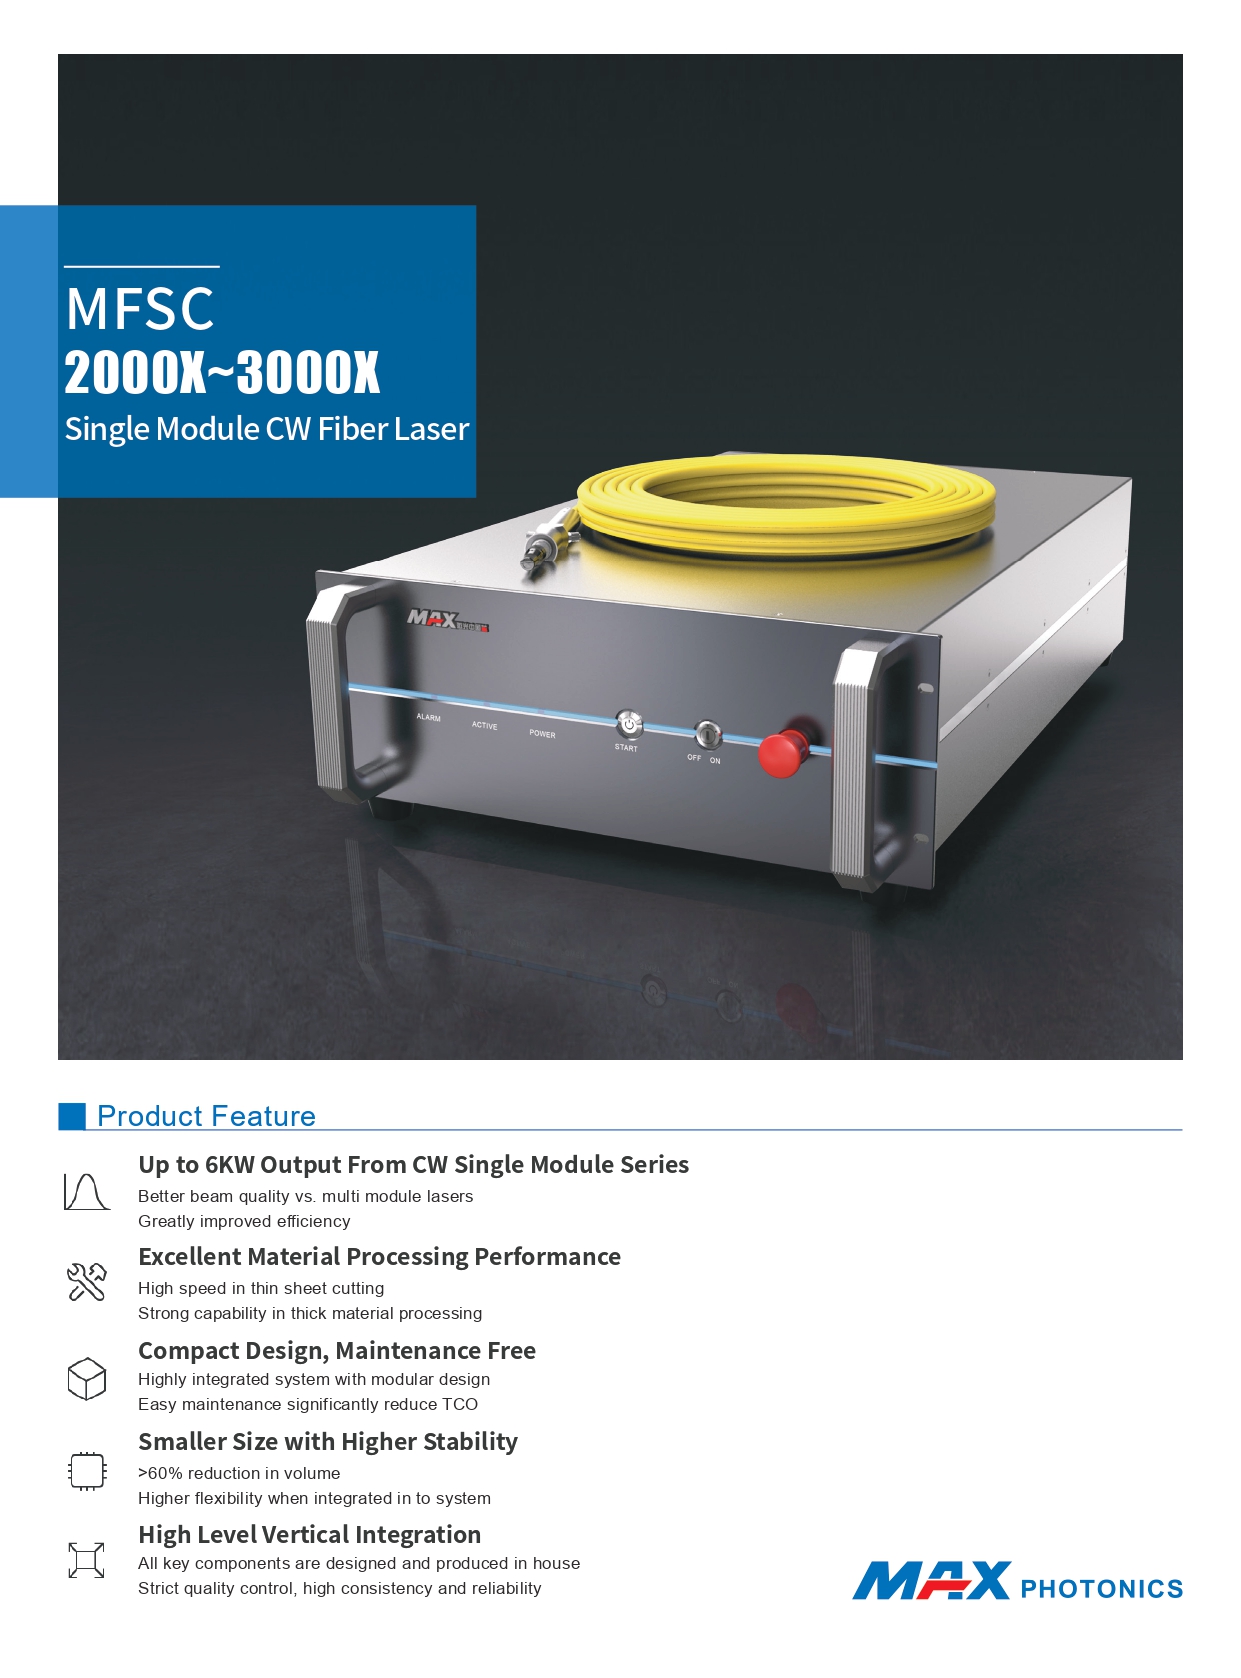 MFSC Single Module CW Fiber Laser Source